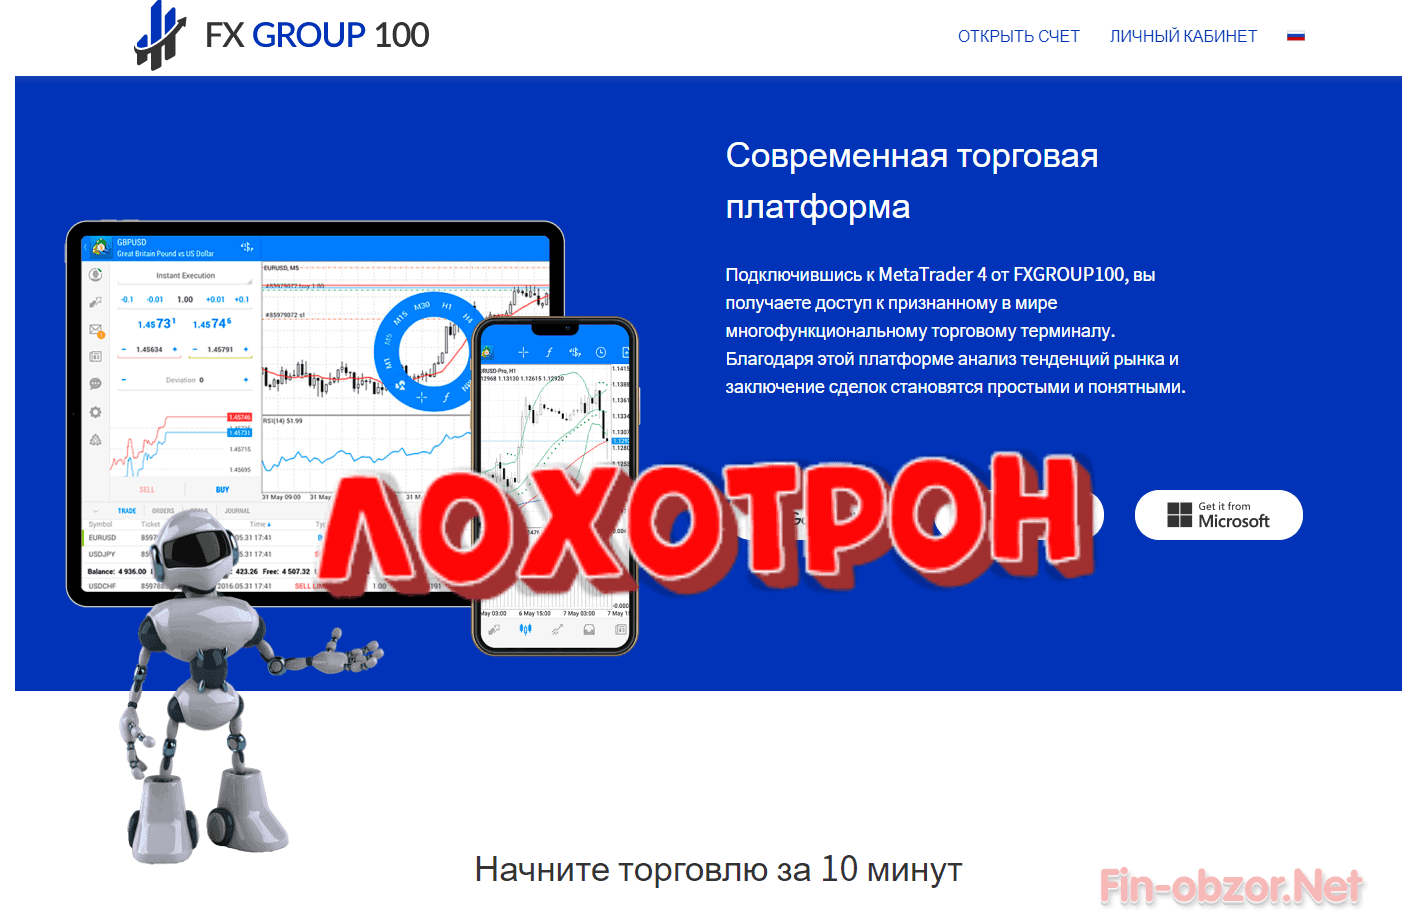 FXGroup100 (fxgroup100.com) - отзывы и проверка брокера